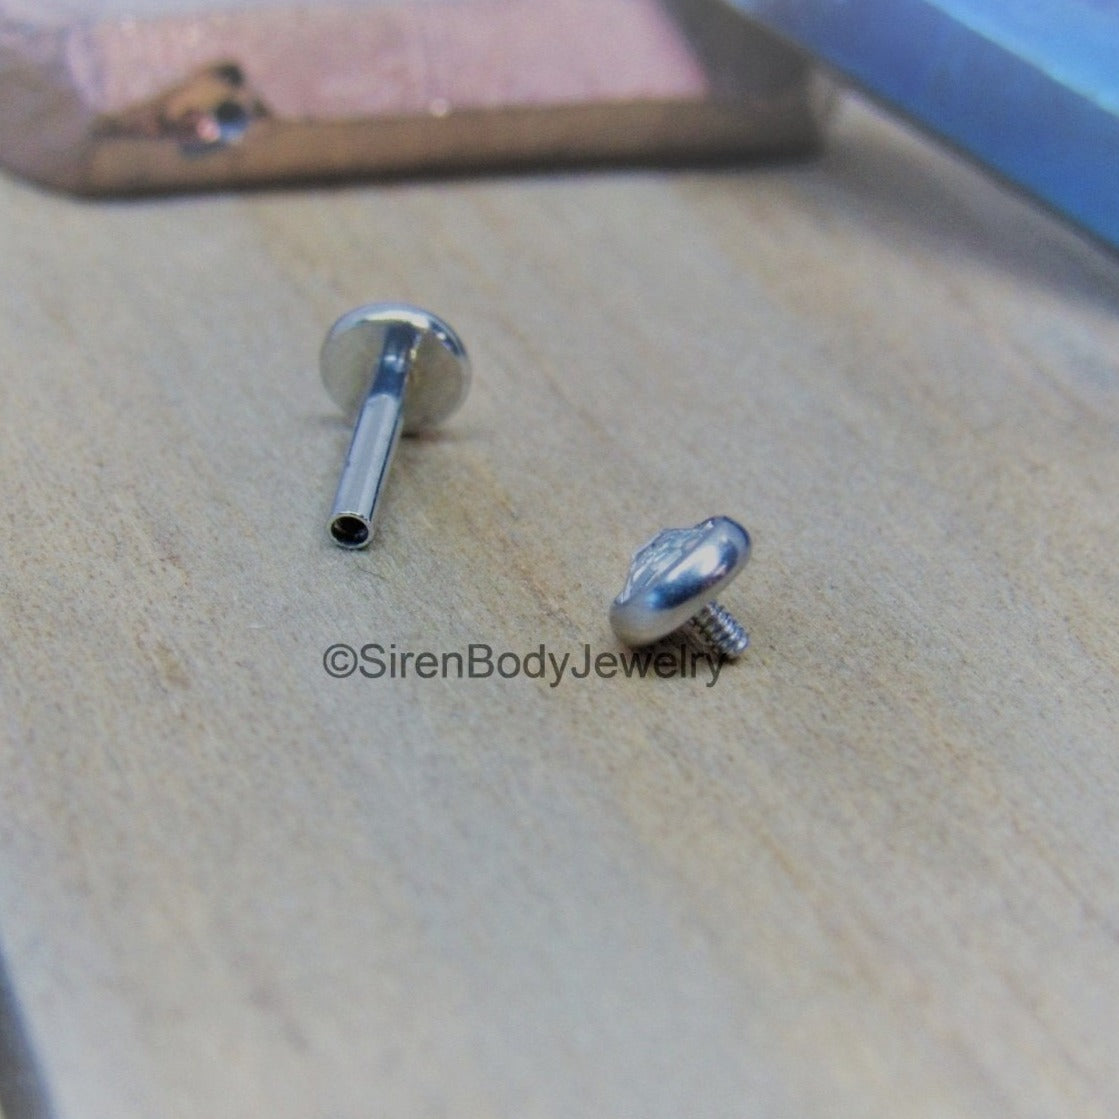 16g cz gemstone titanium flat back labret stud earring 